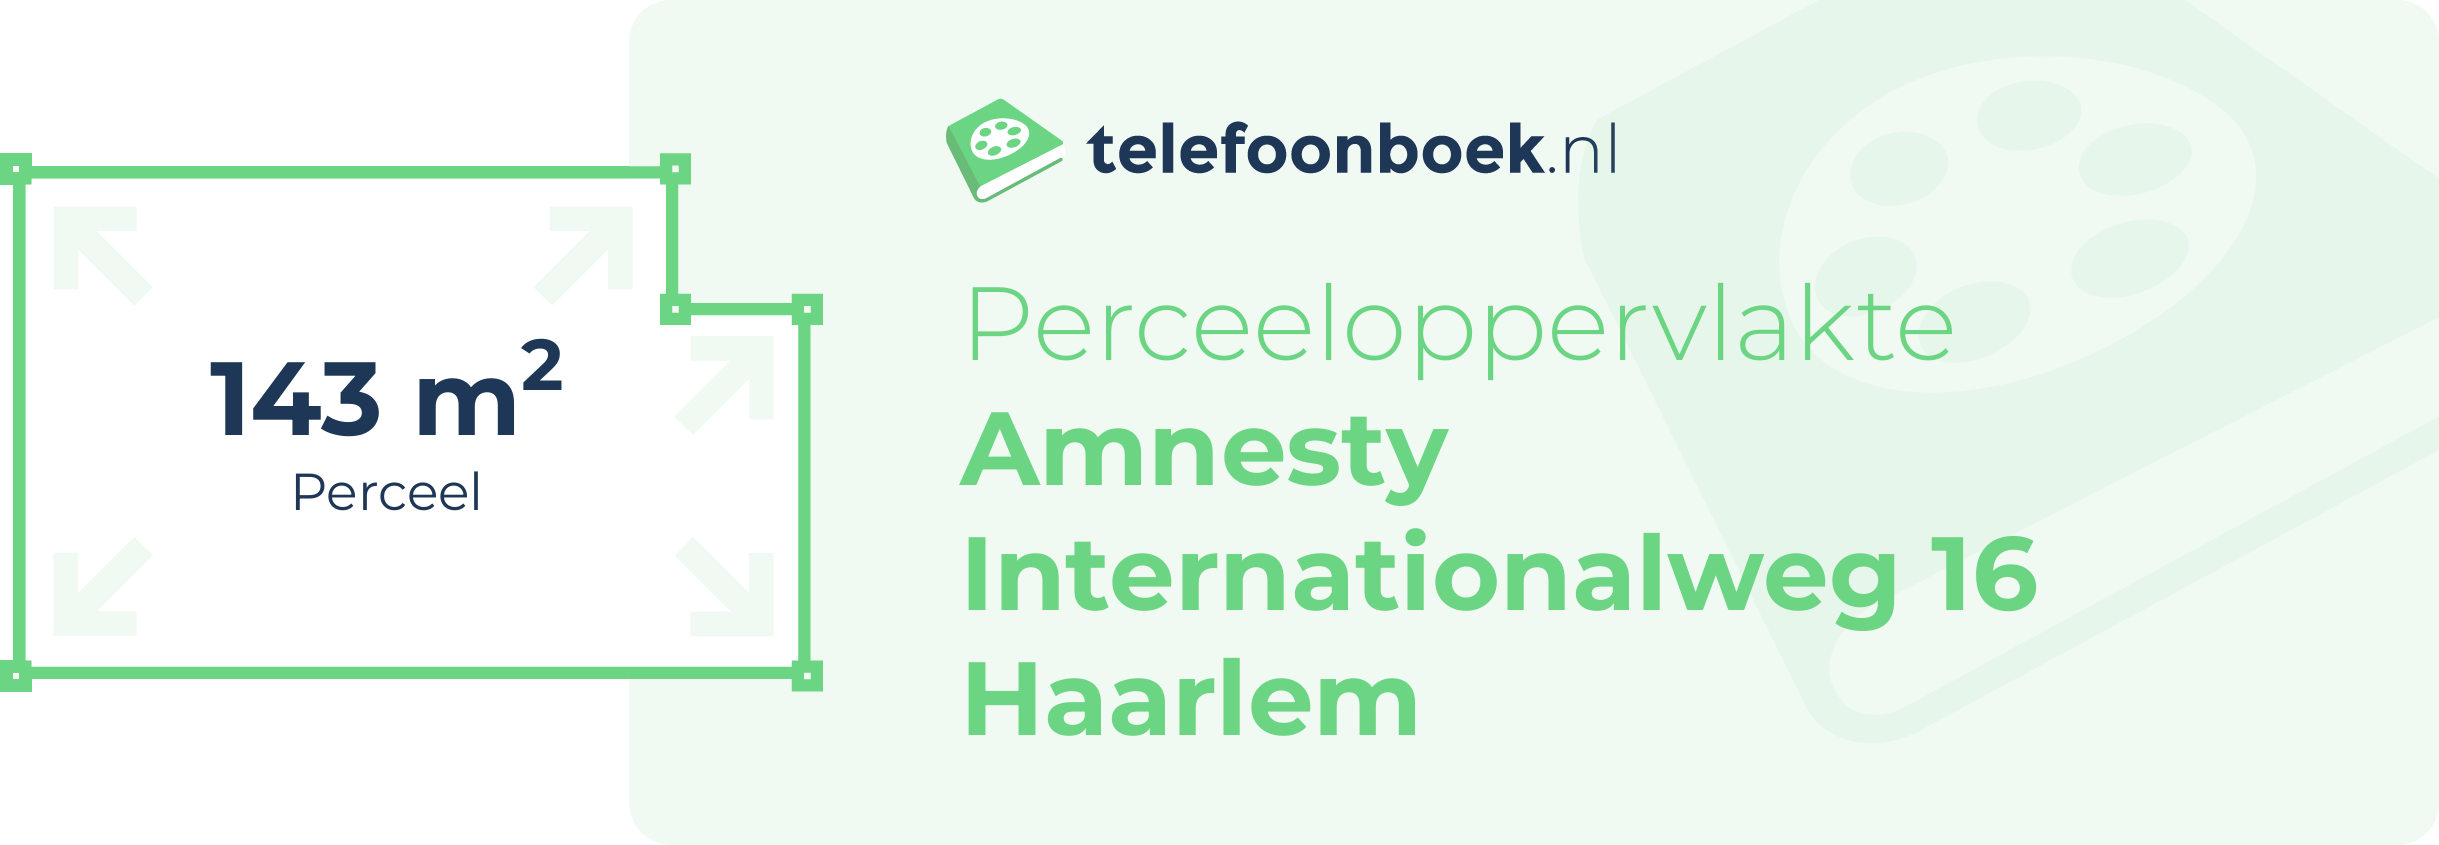 Perceeloppervlakte Amnesty Internationalweg 16 Haarlem